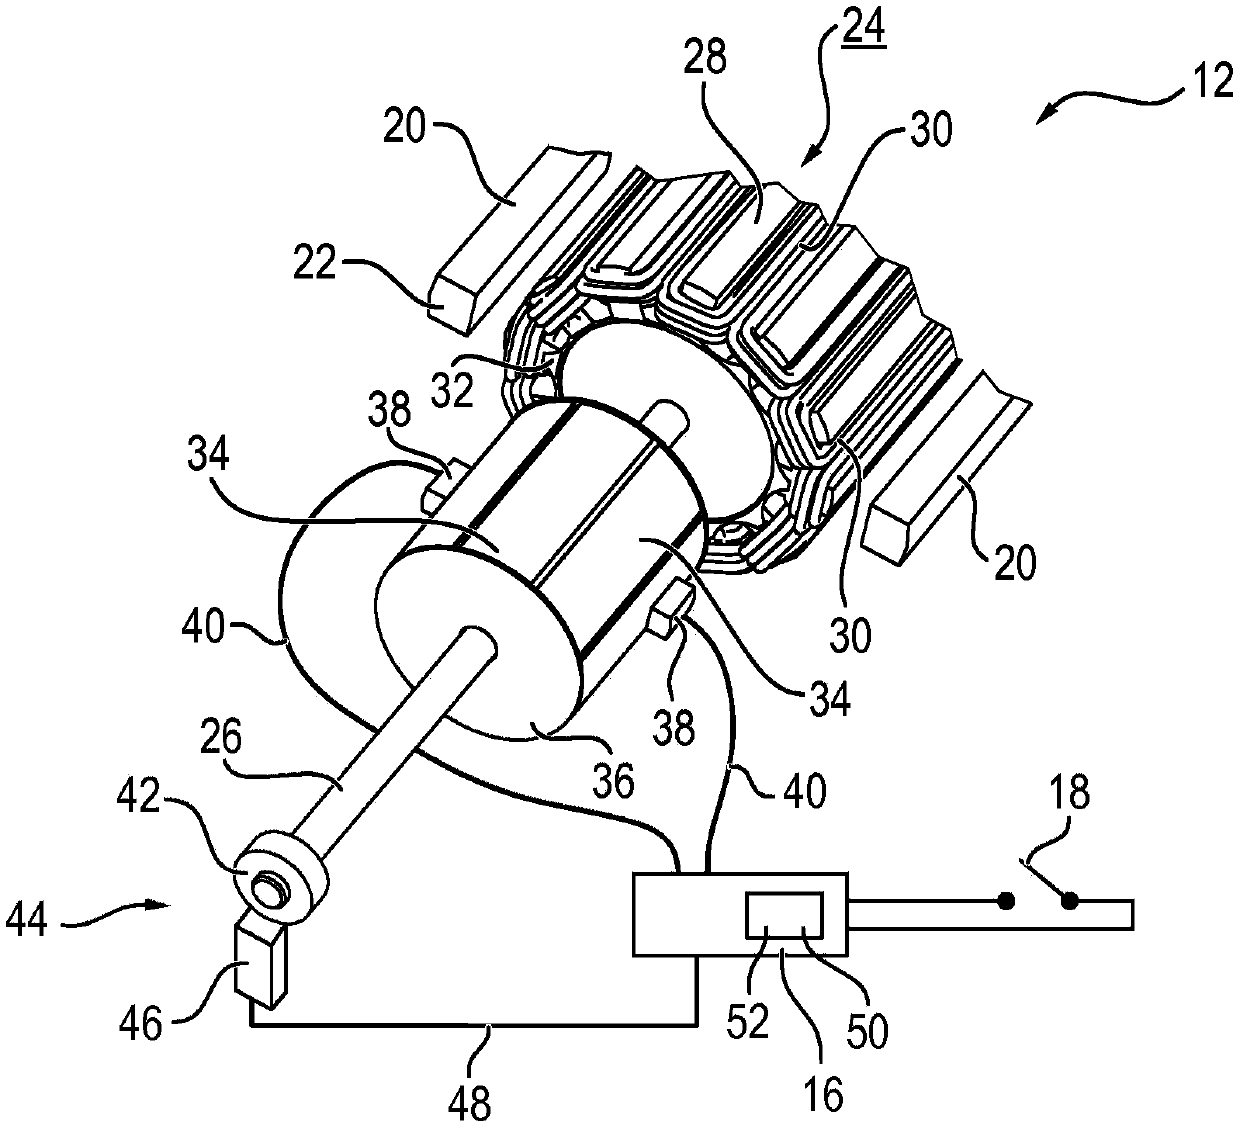 Method for operating a brushed commutator motor of a regulating drive and regulating drive